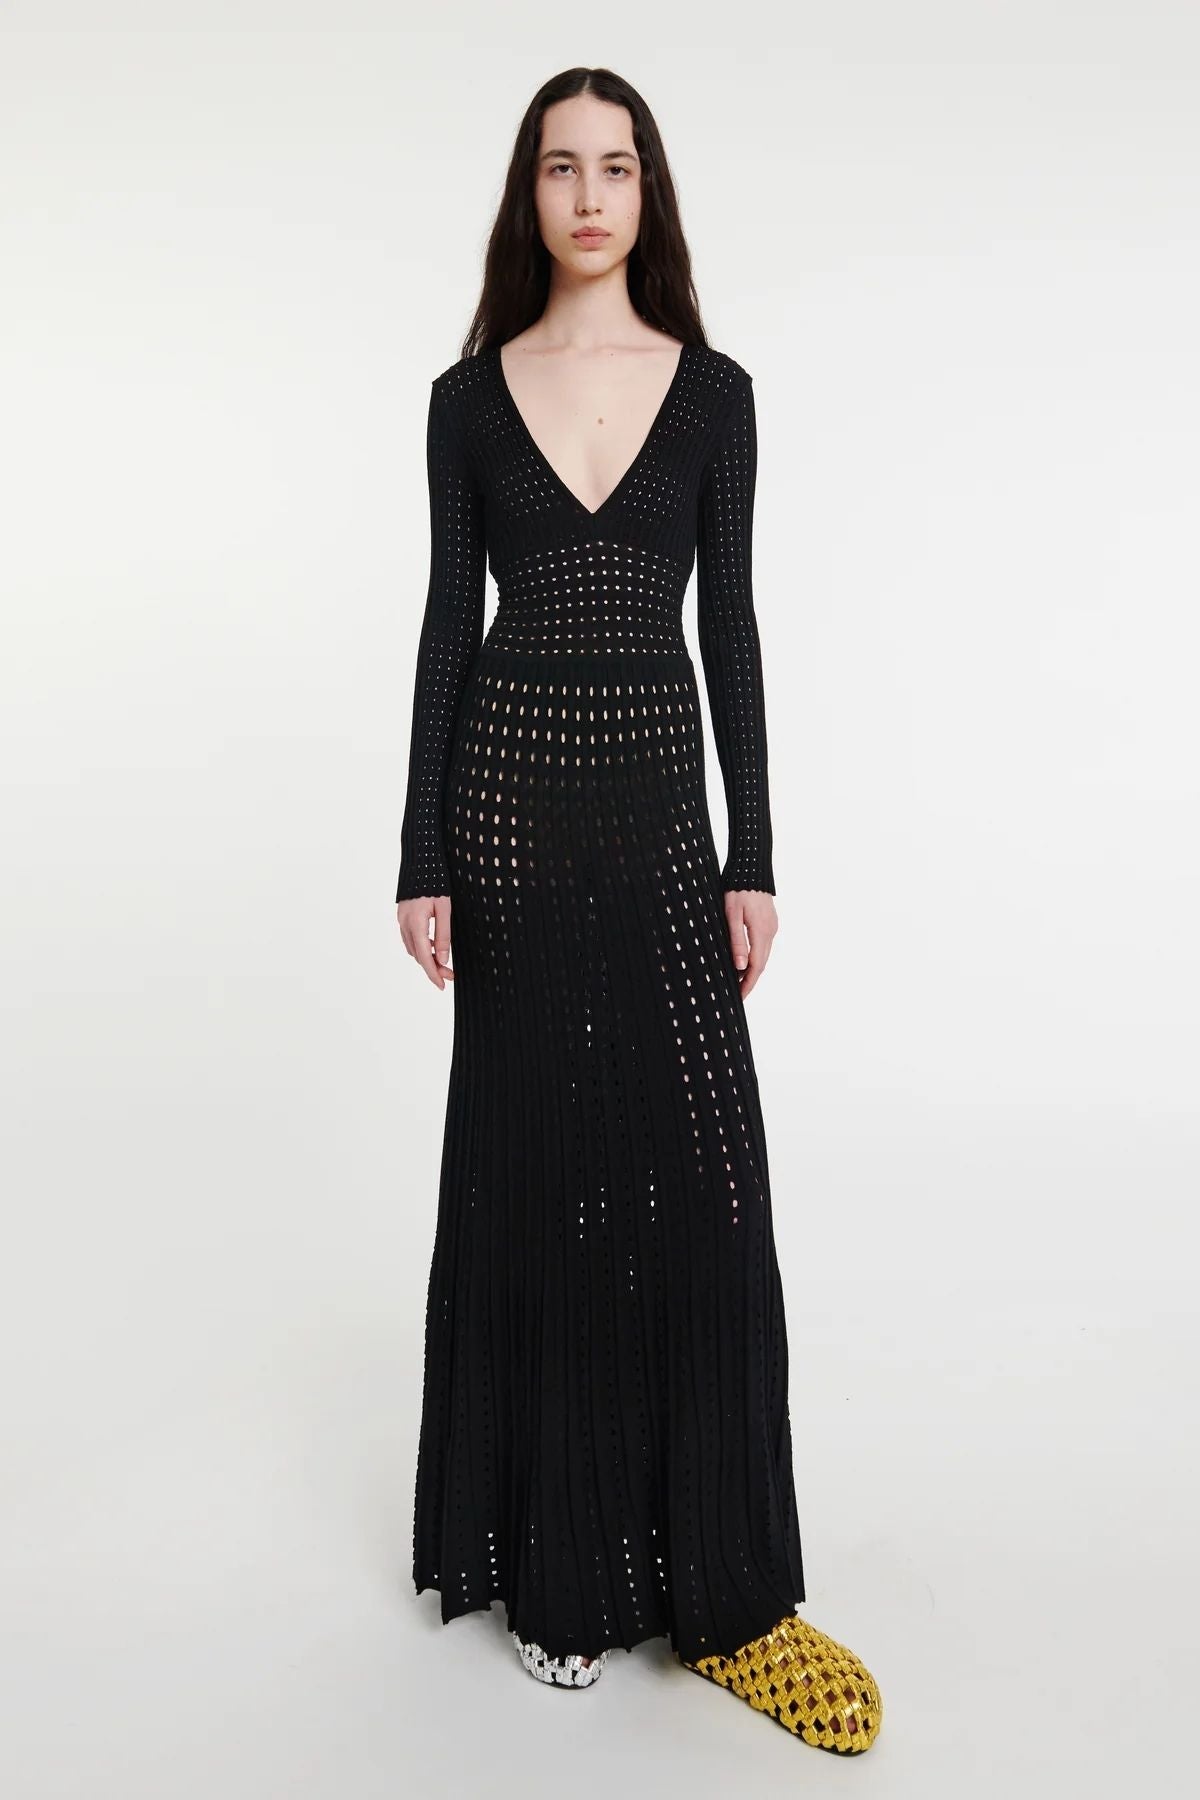 A.W.A.K.E Mode Perforated Knit Dress - Black